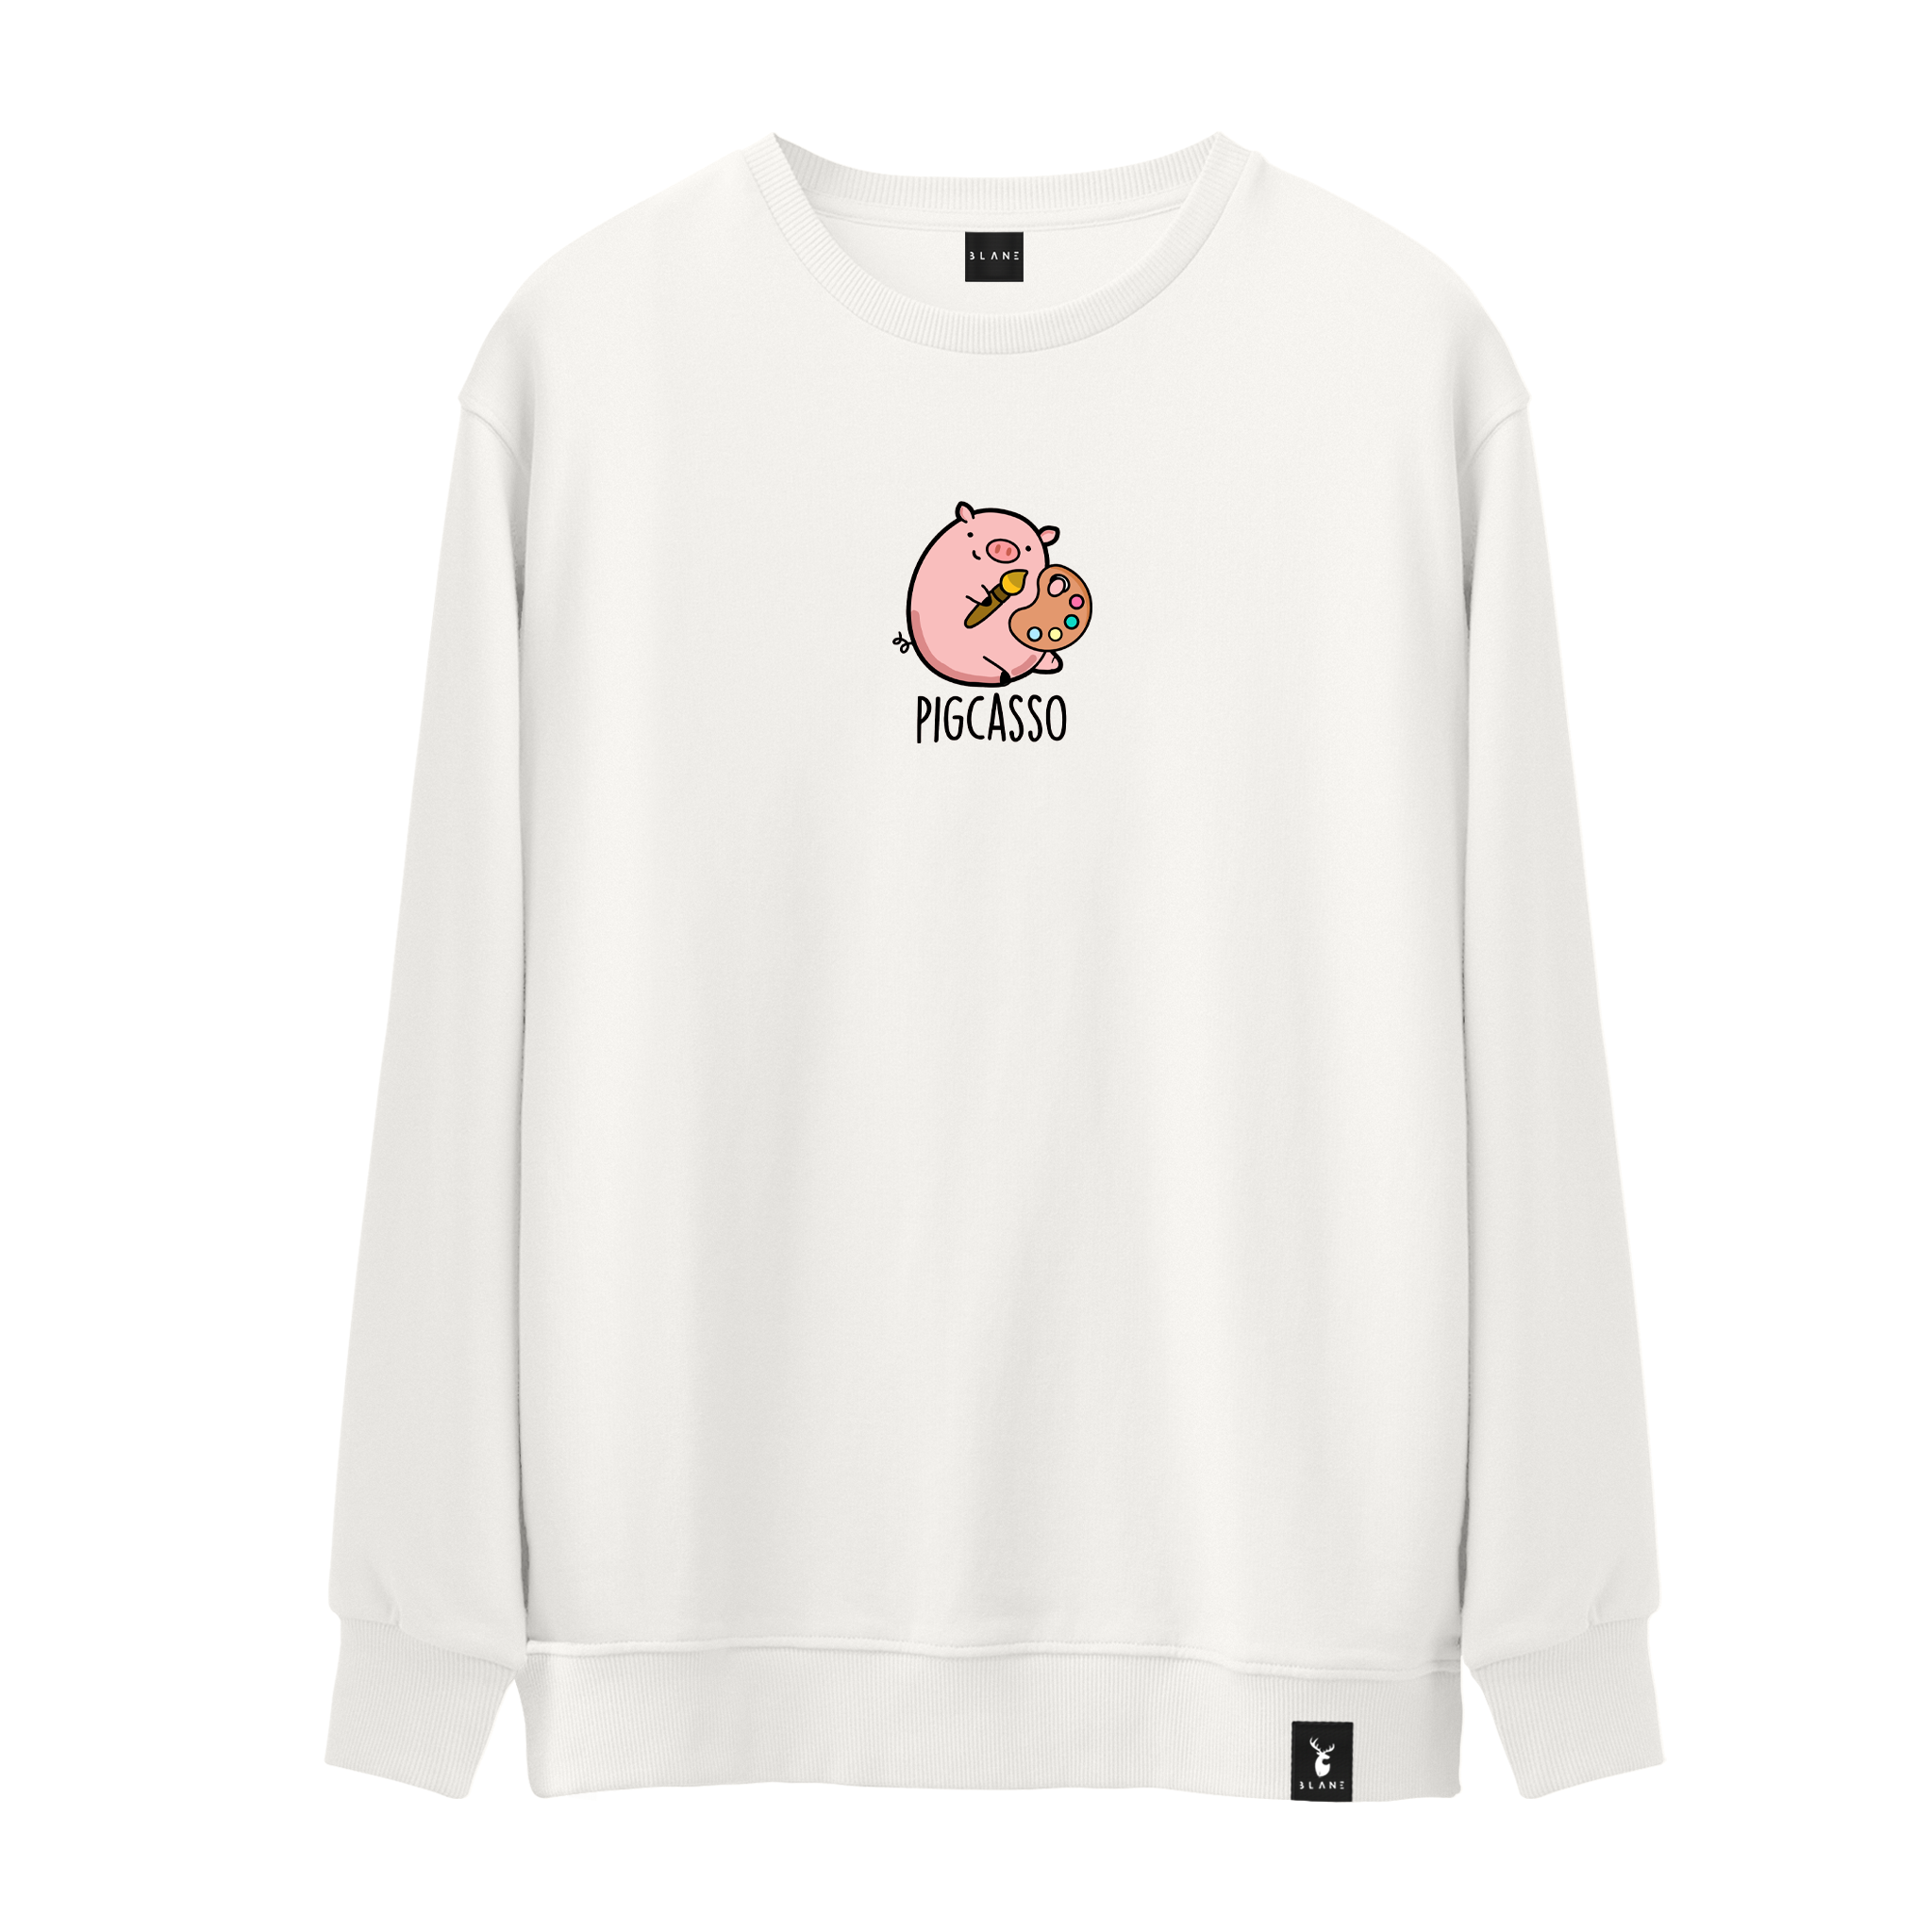 Pigcasso - Sweatshirt